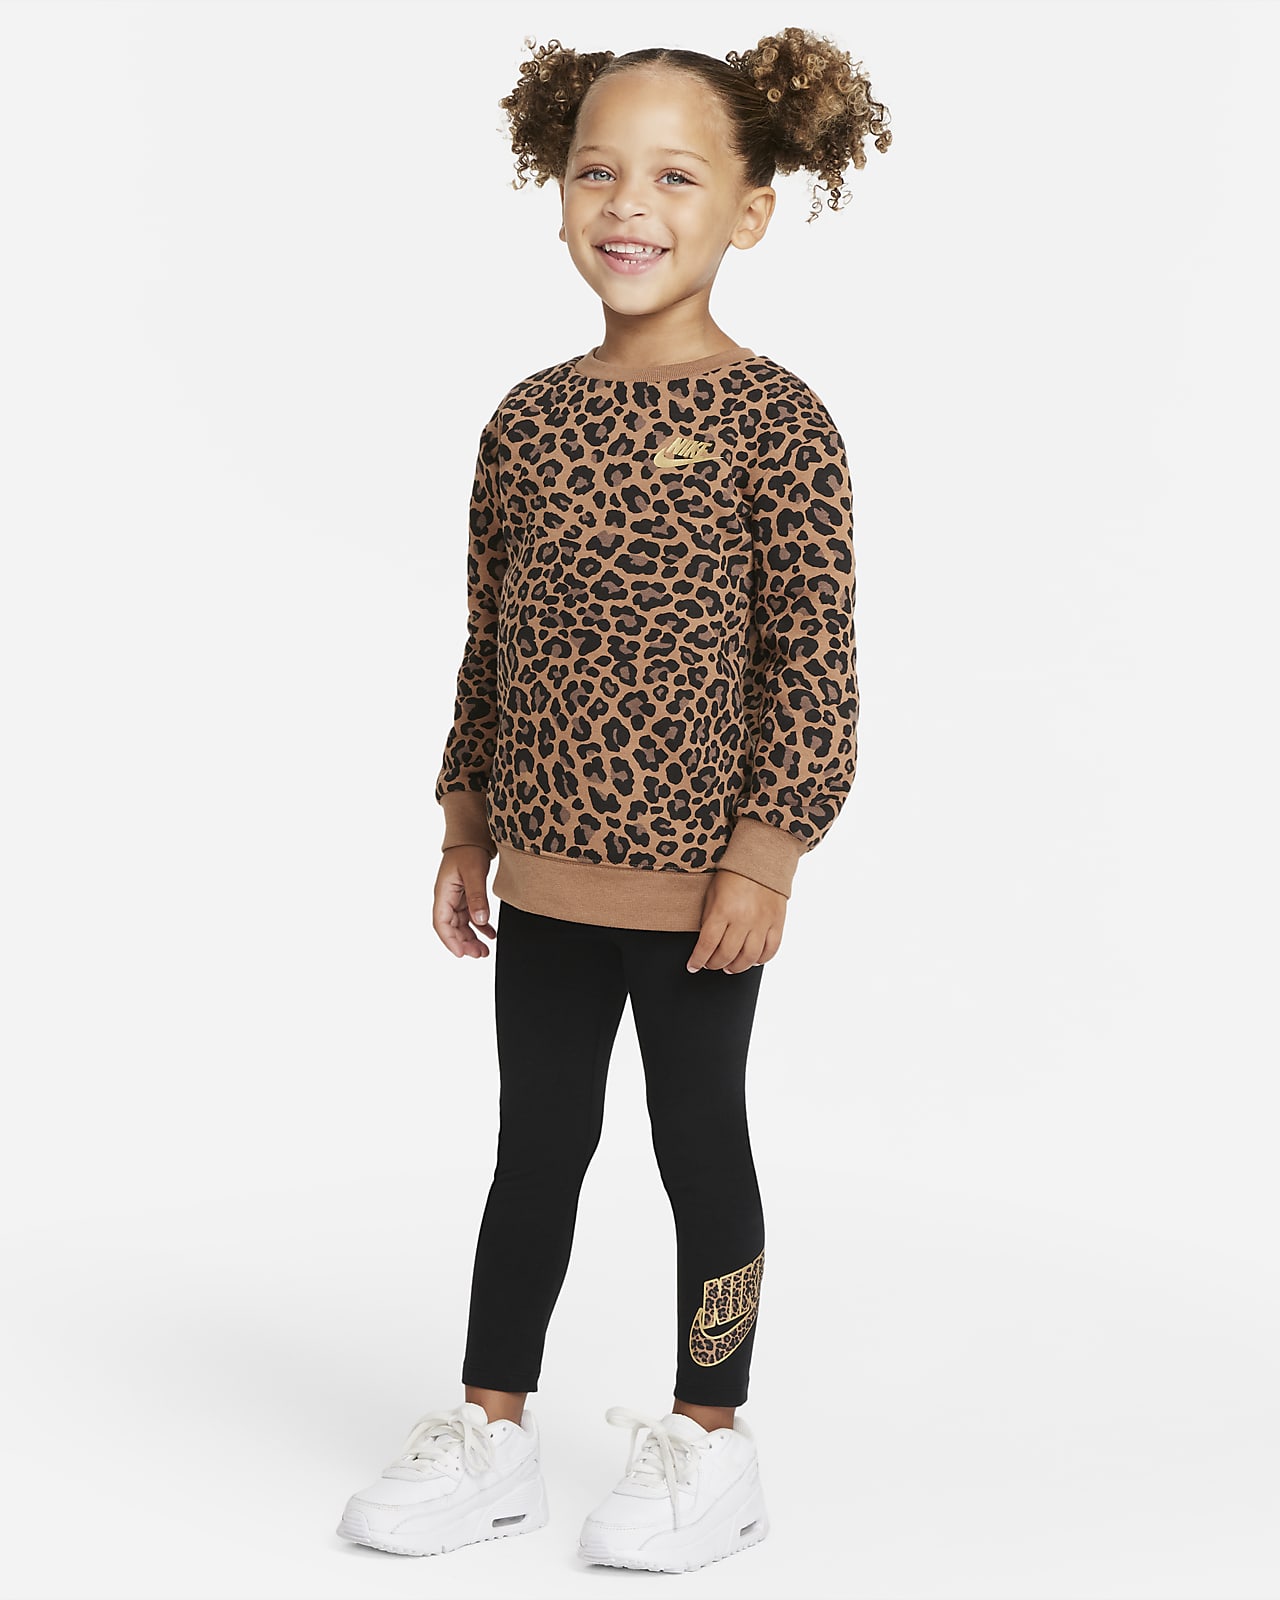 Nike Toddler Leopard Sweatshirt and Leggings Set